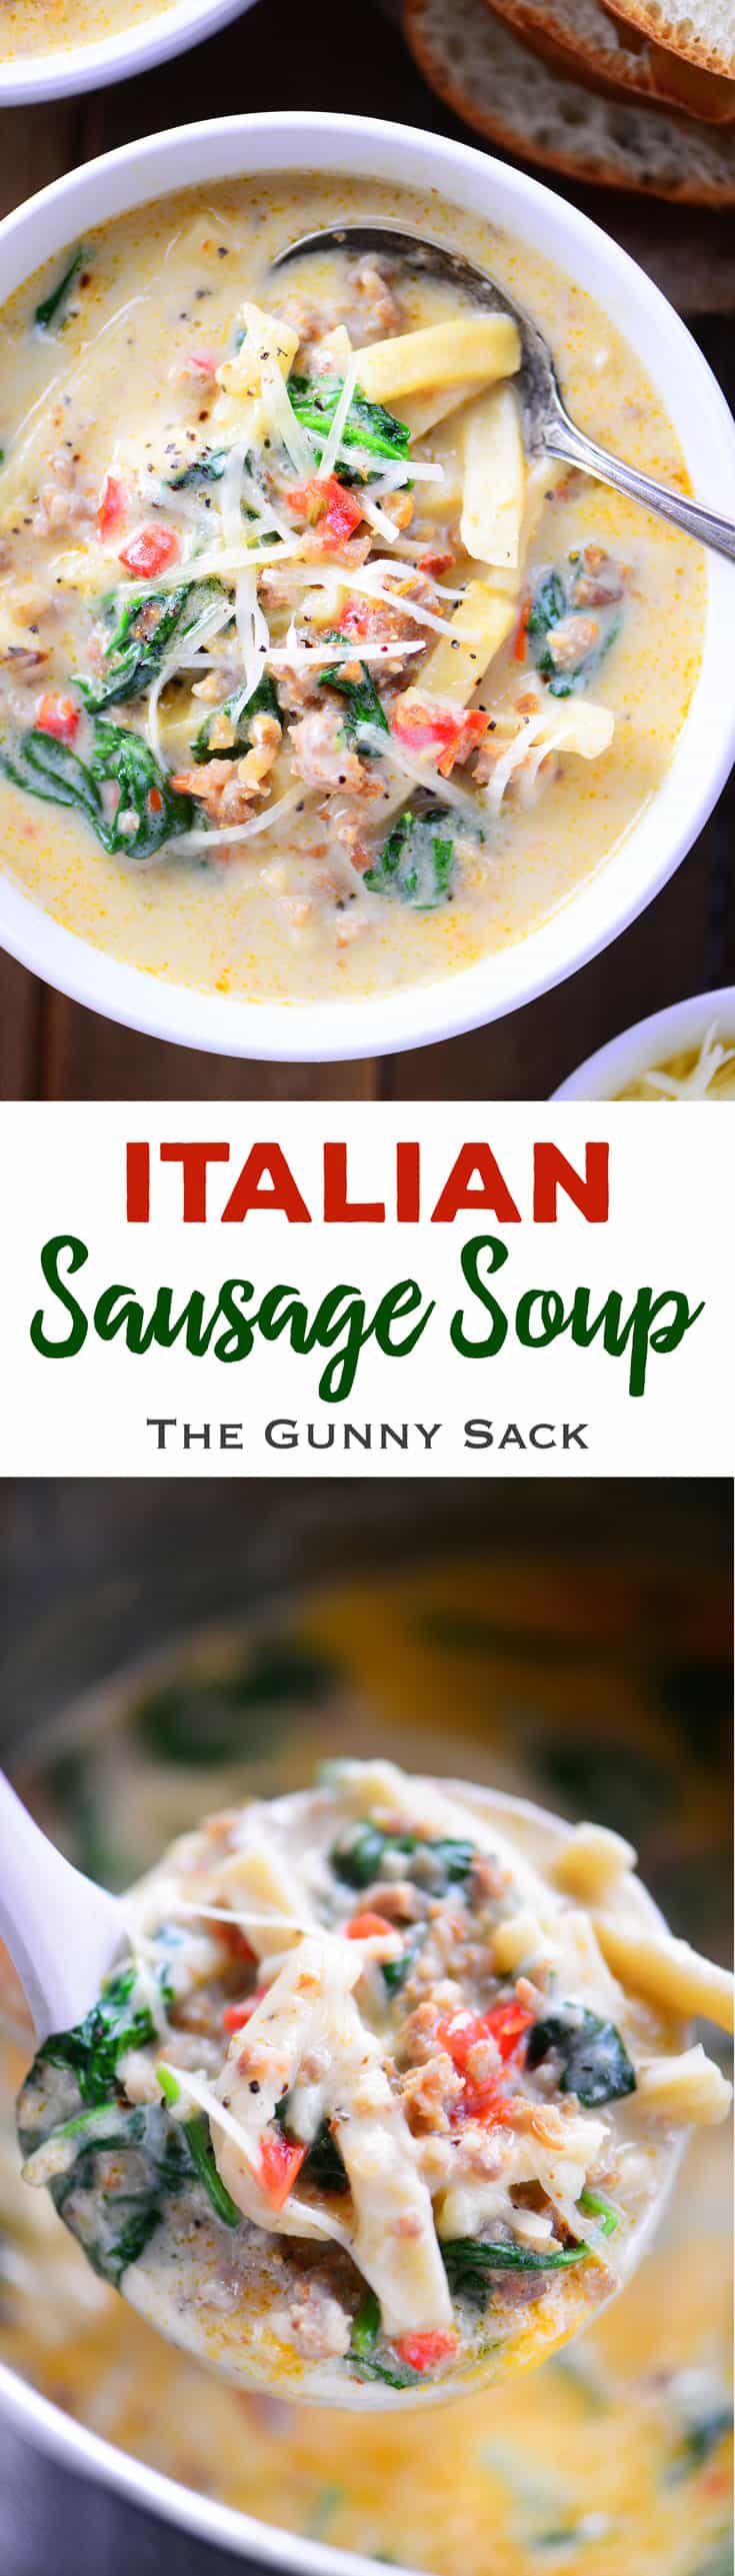 Italian Sausage Soup Recipe - The Gunny Sack